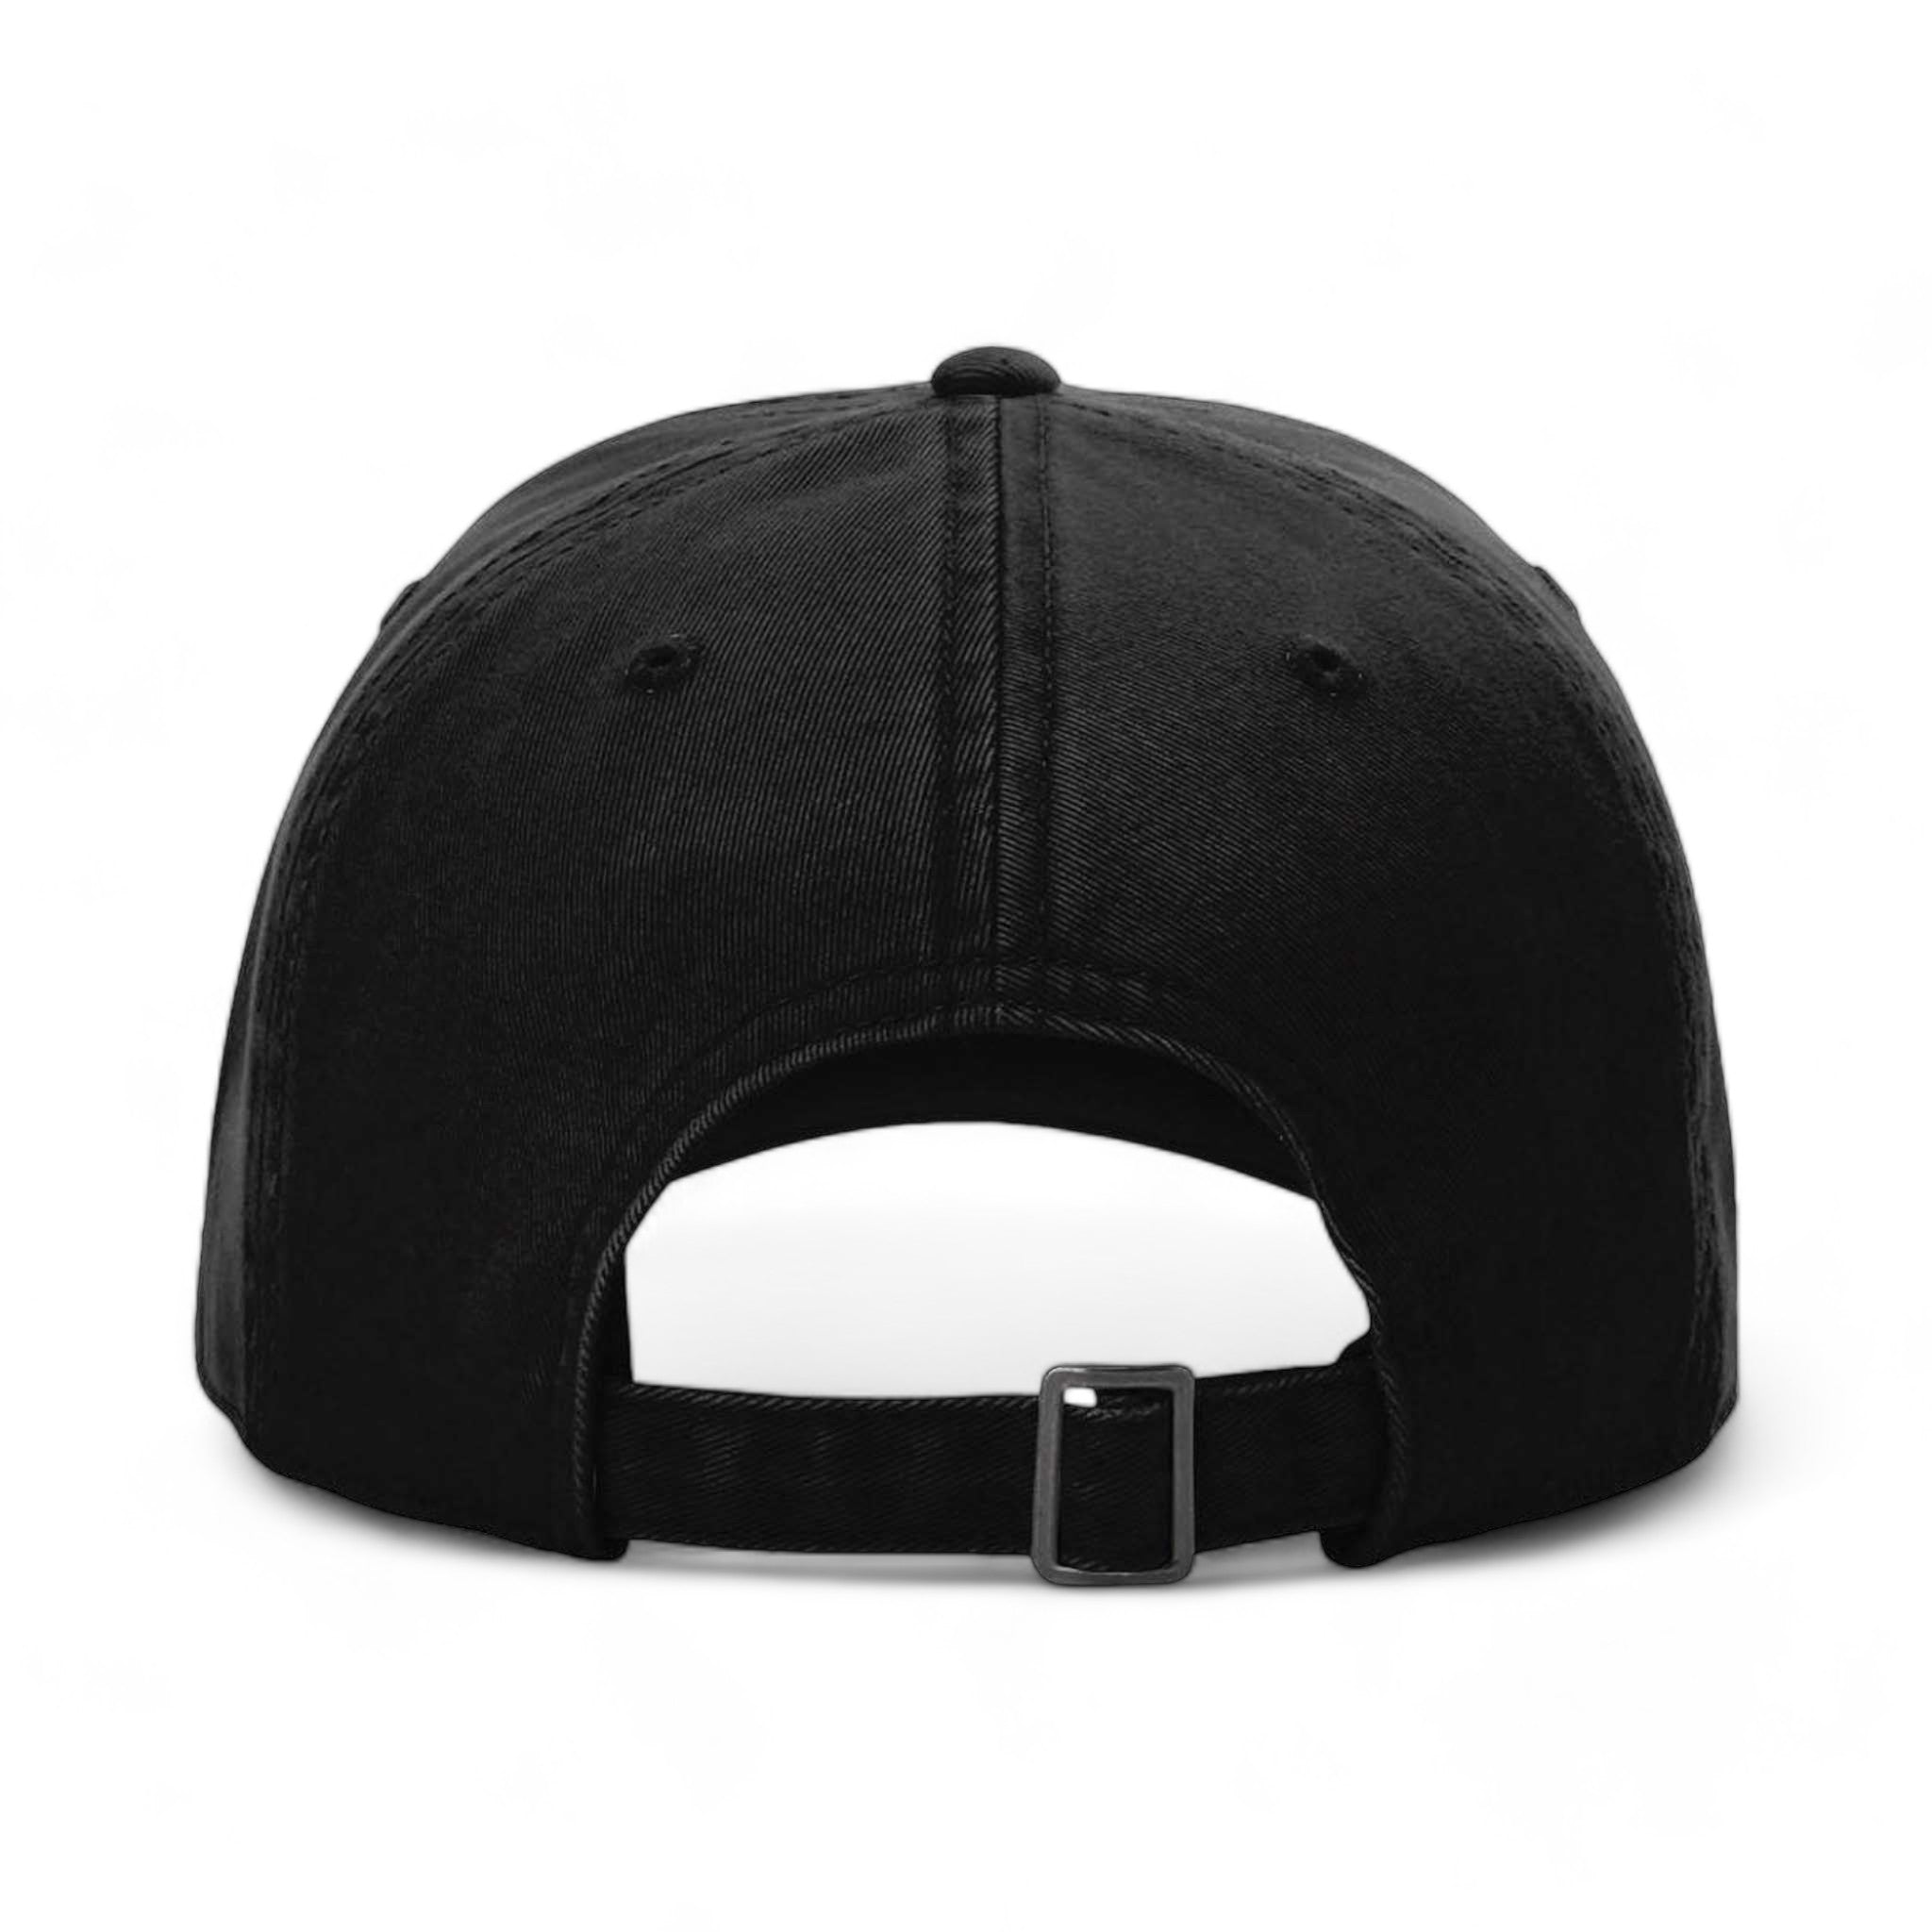 Back view of Richardson 326 custom hat in black